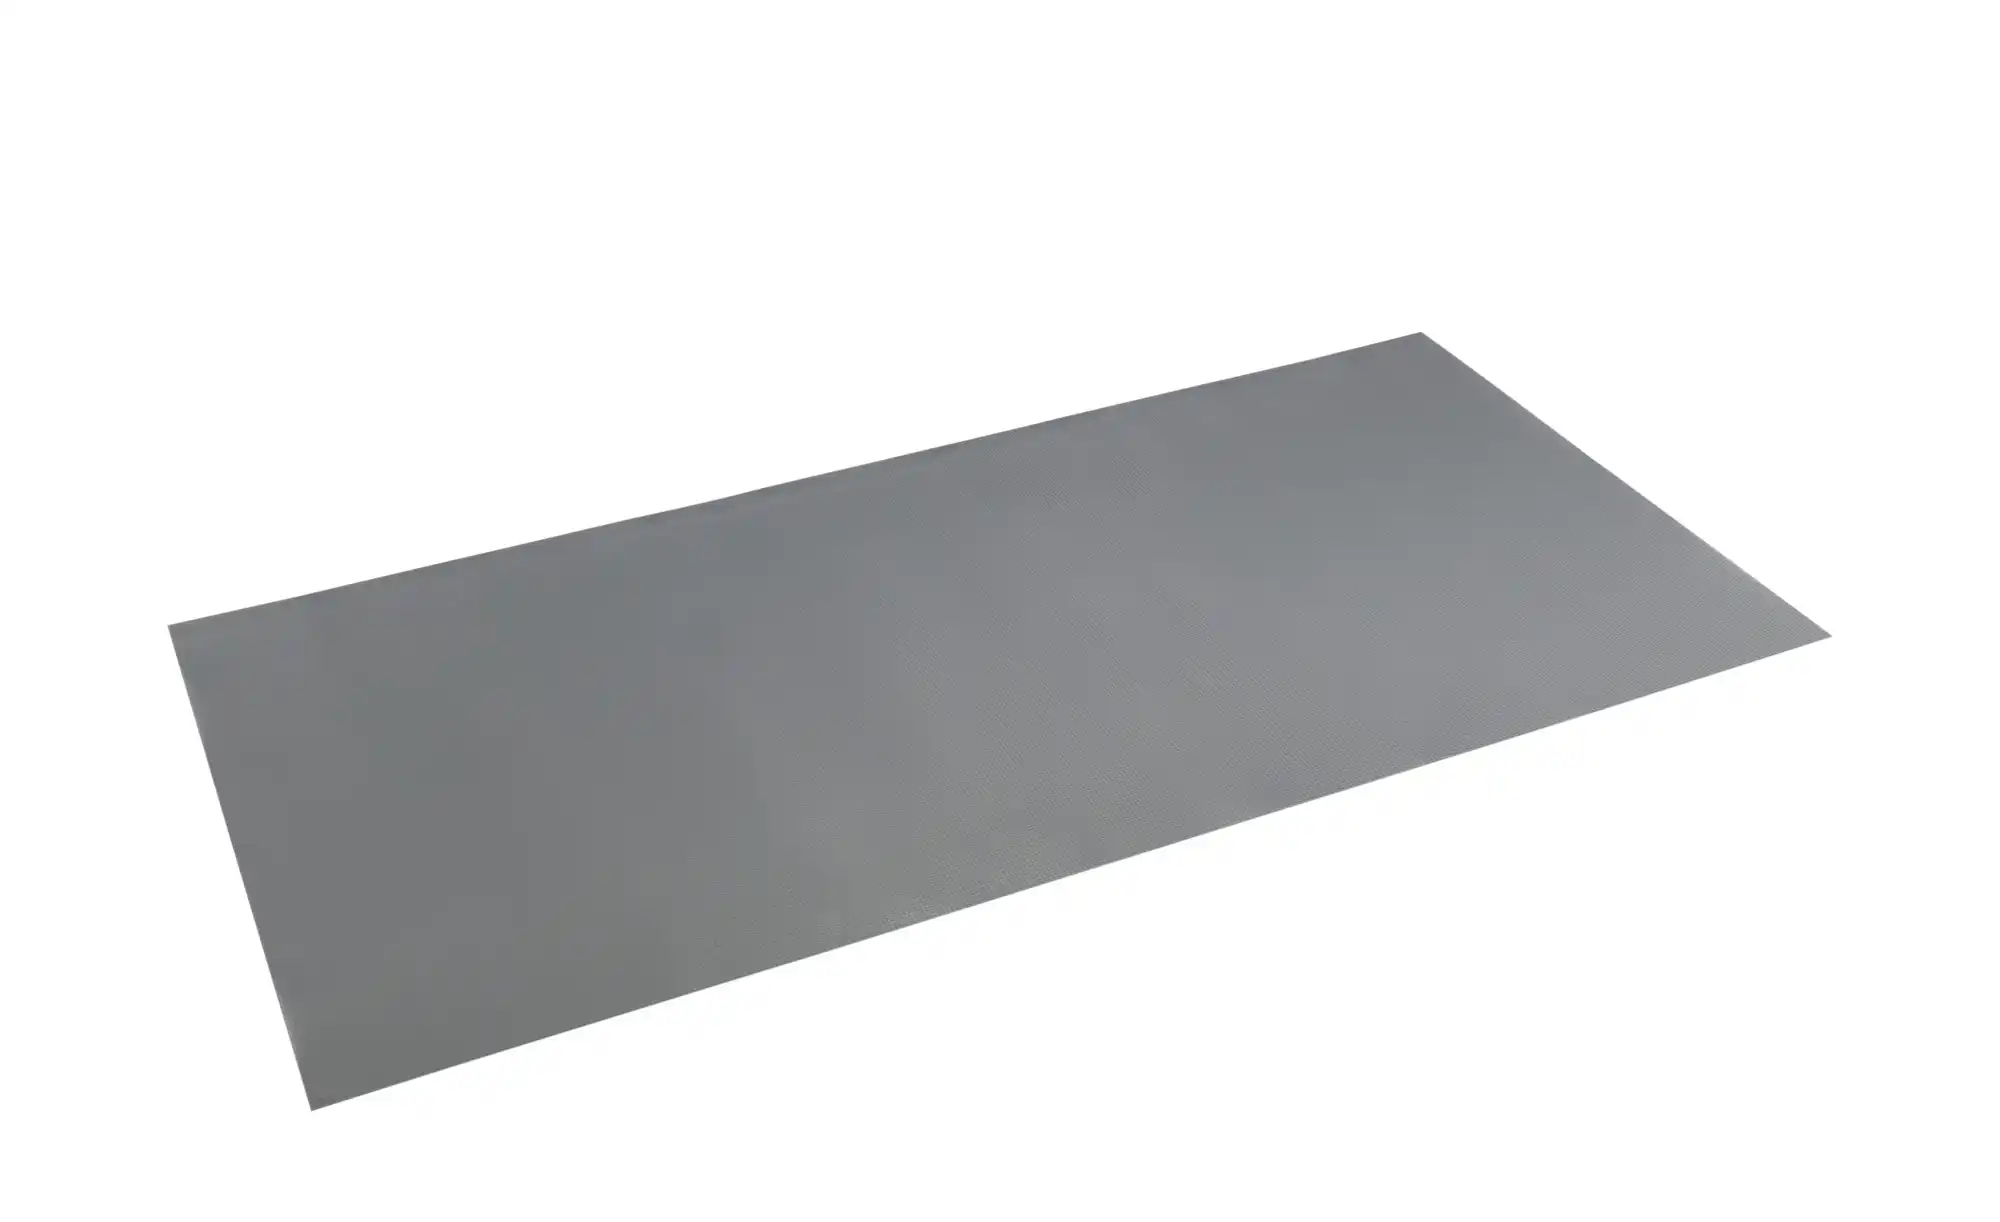 Dunlop Kfz-Anti-Rutsch-Matte PVC Schwarz 20 x 12 cm kaufen bei OBI